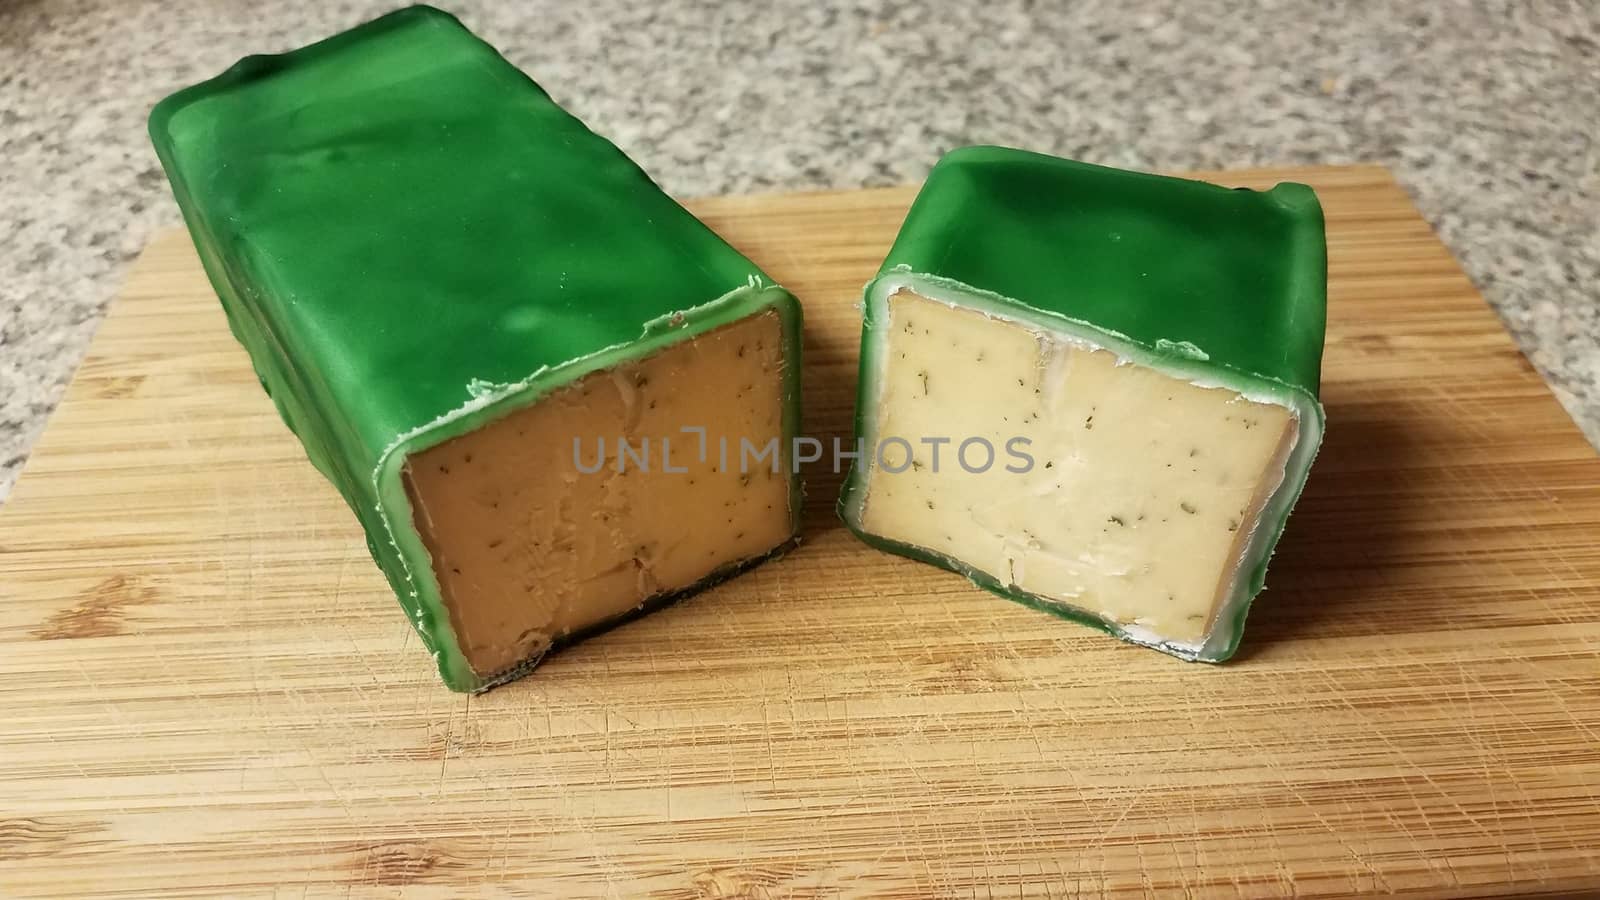 cut cheese sealed in green wax on wood cutting board by stockphotofan1